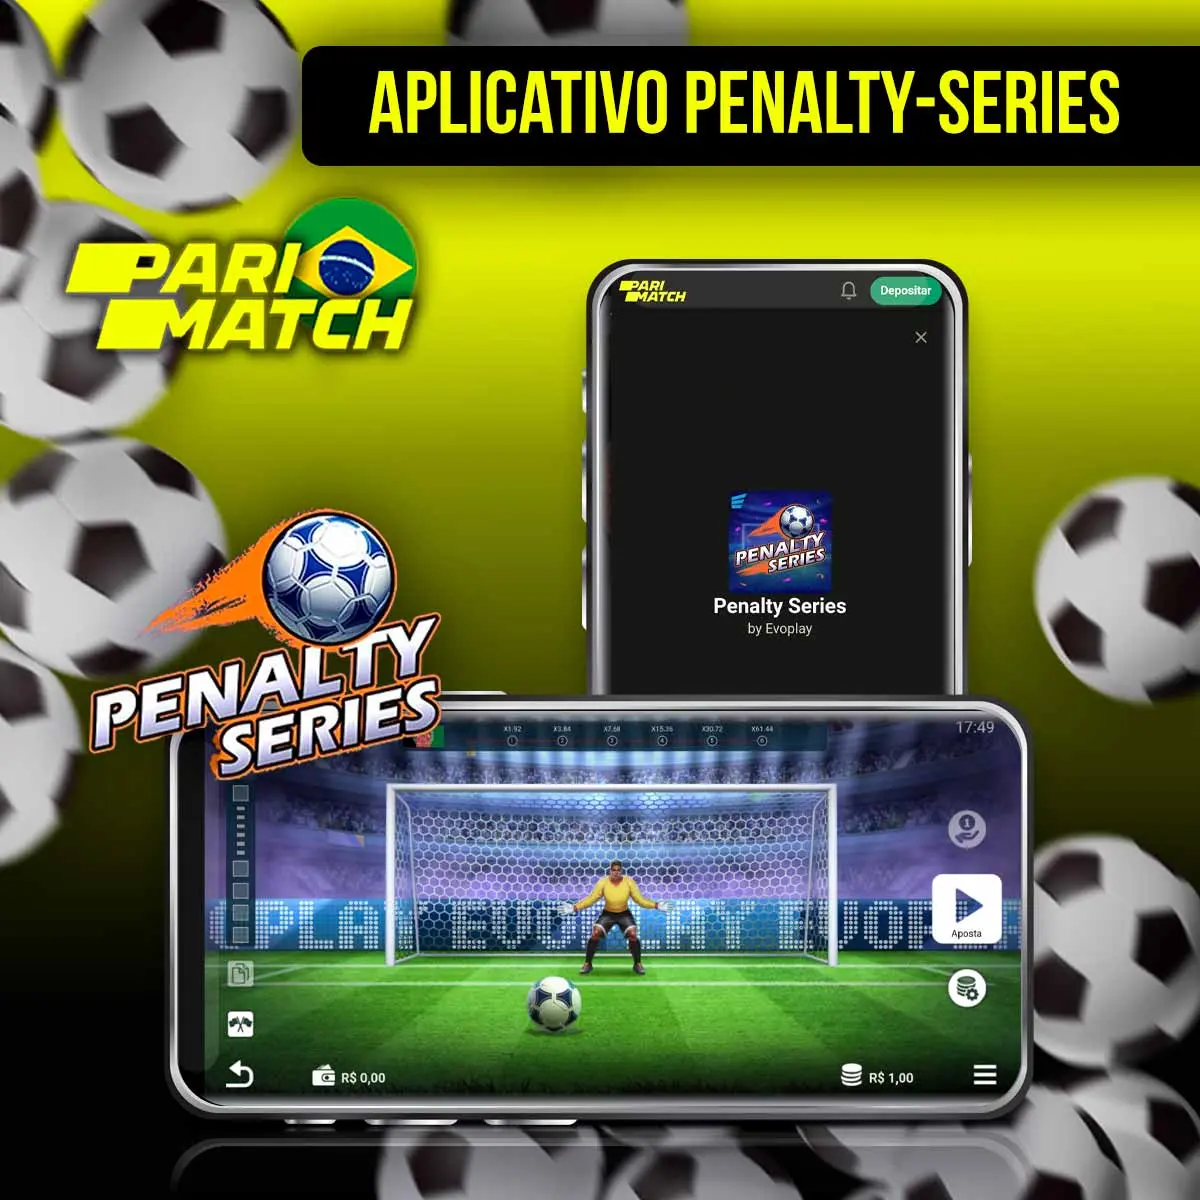 Aplicativo da Parimatch para jogar Penalty-Series